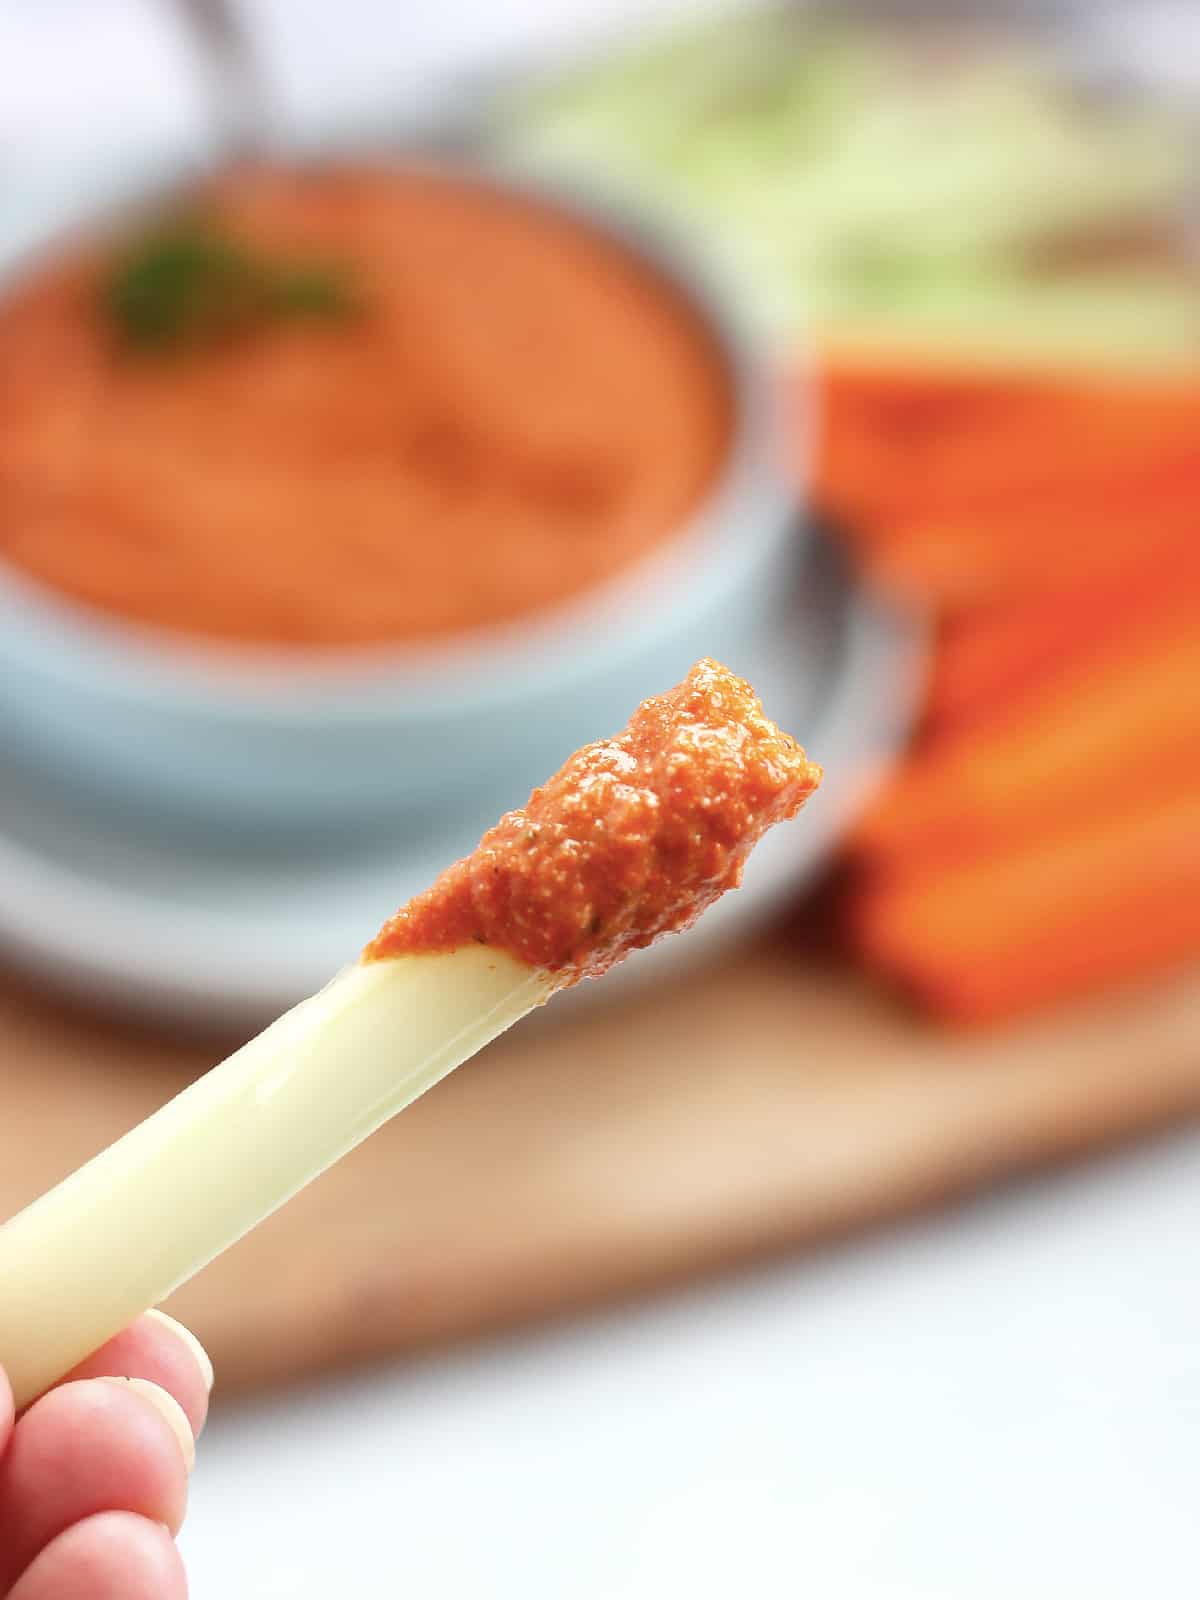 Feta dip on a celery stick.